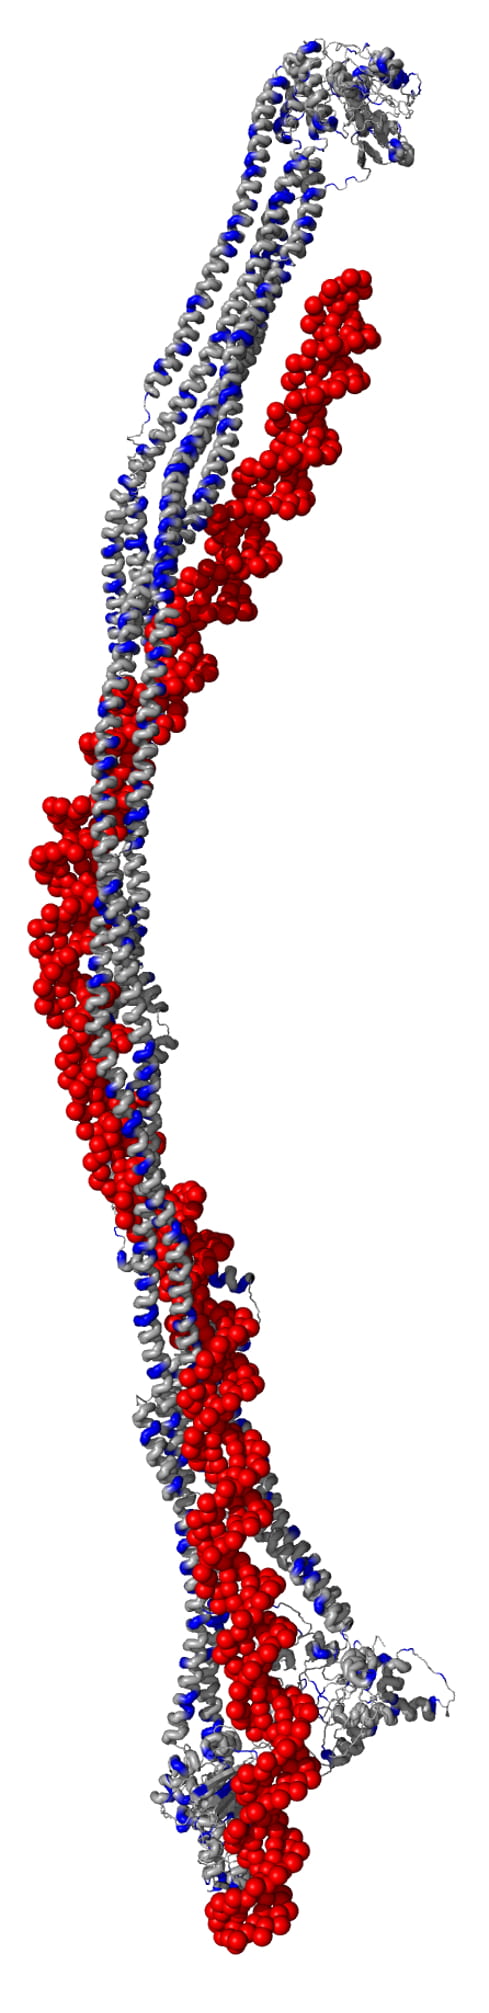 Snake-like proteins can wrangle DNA | EurekAlert!